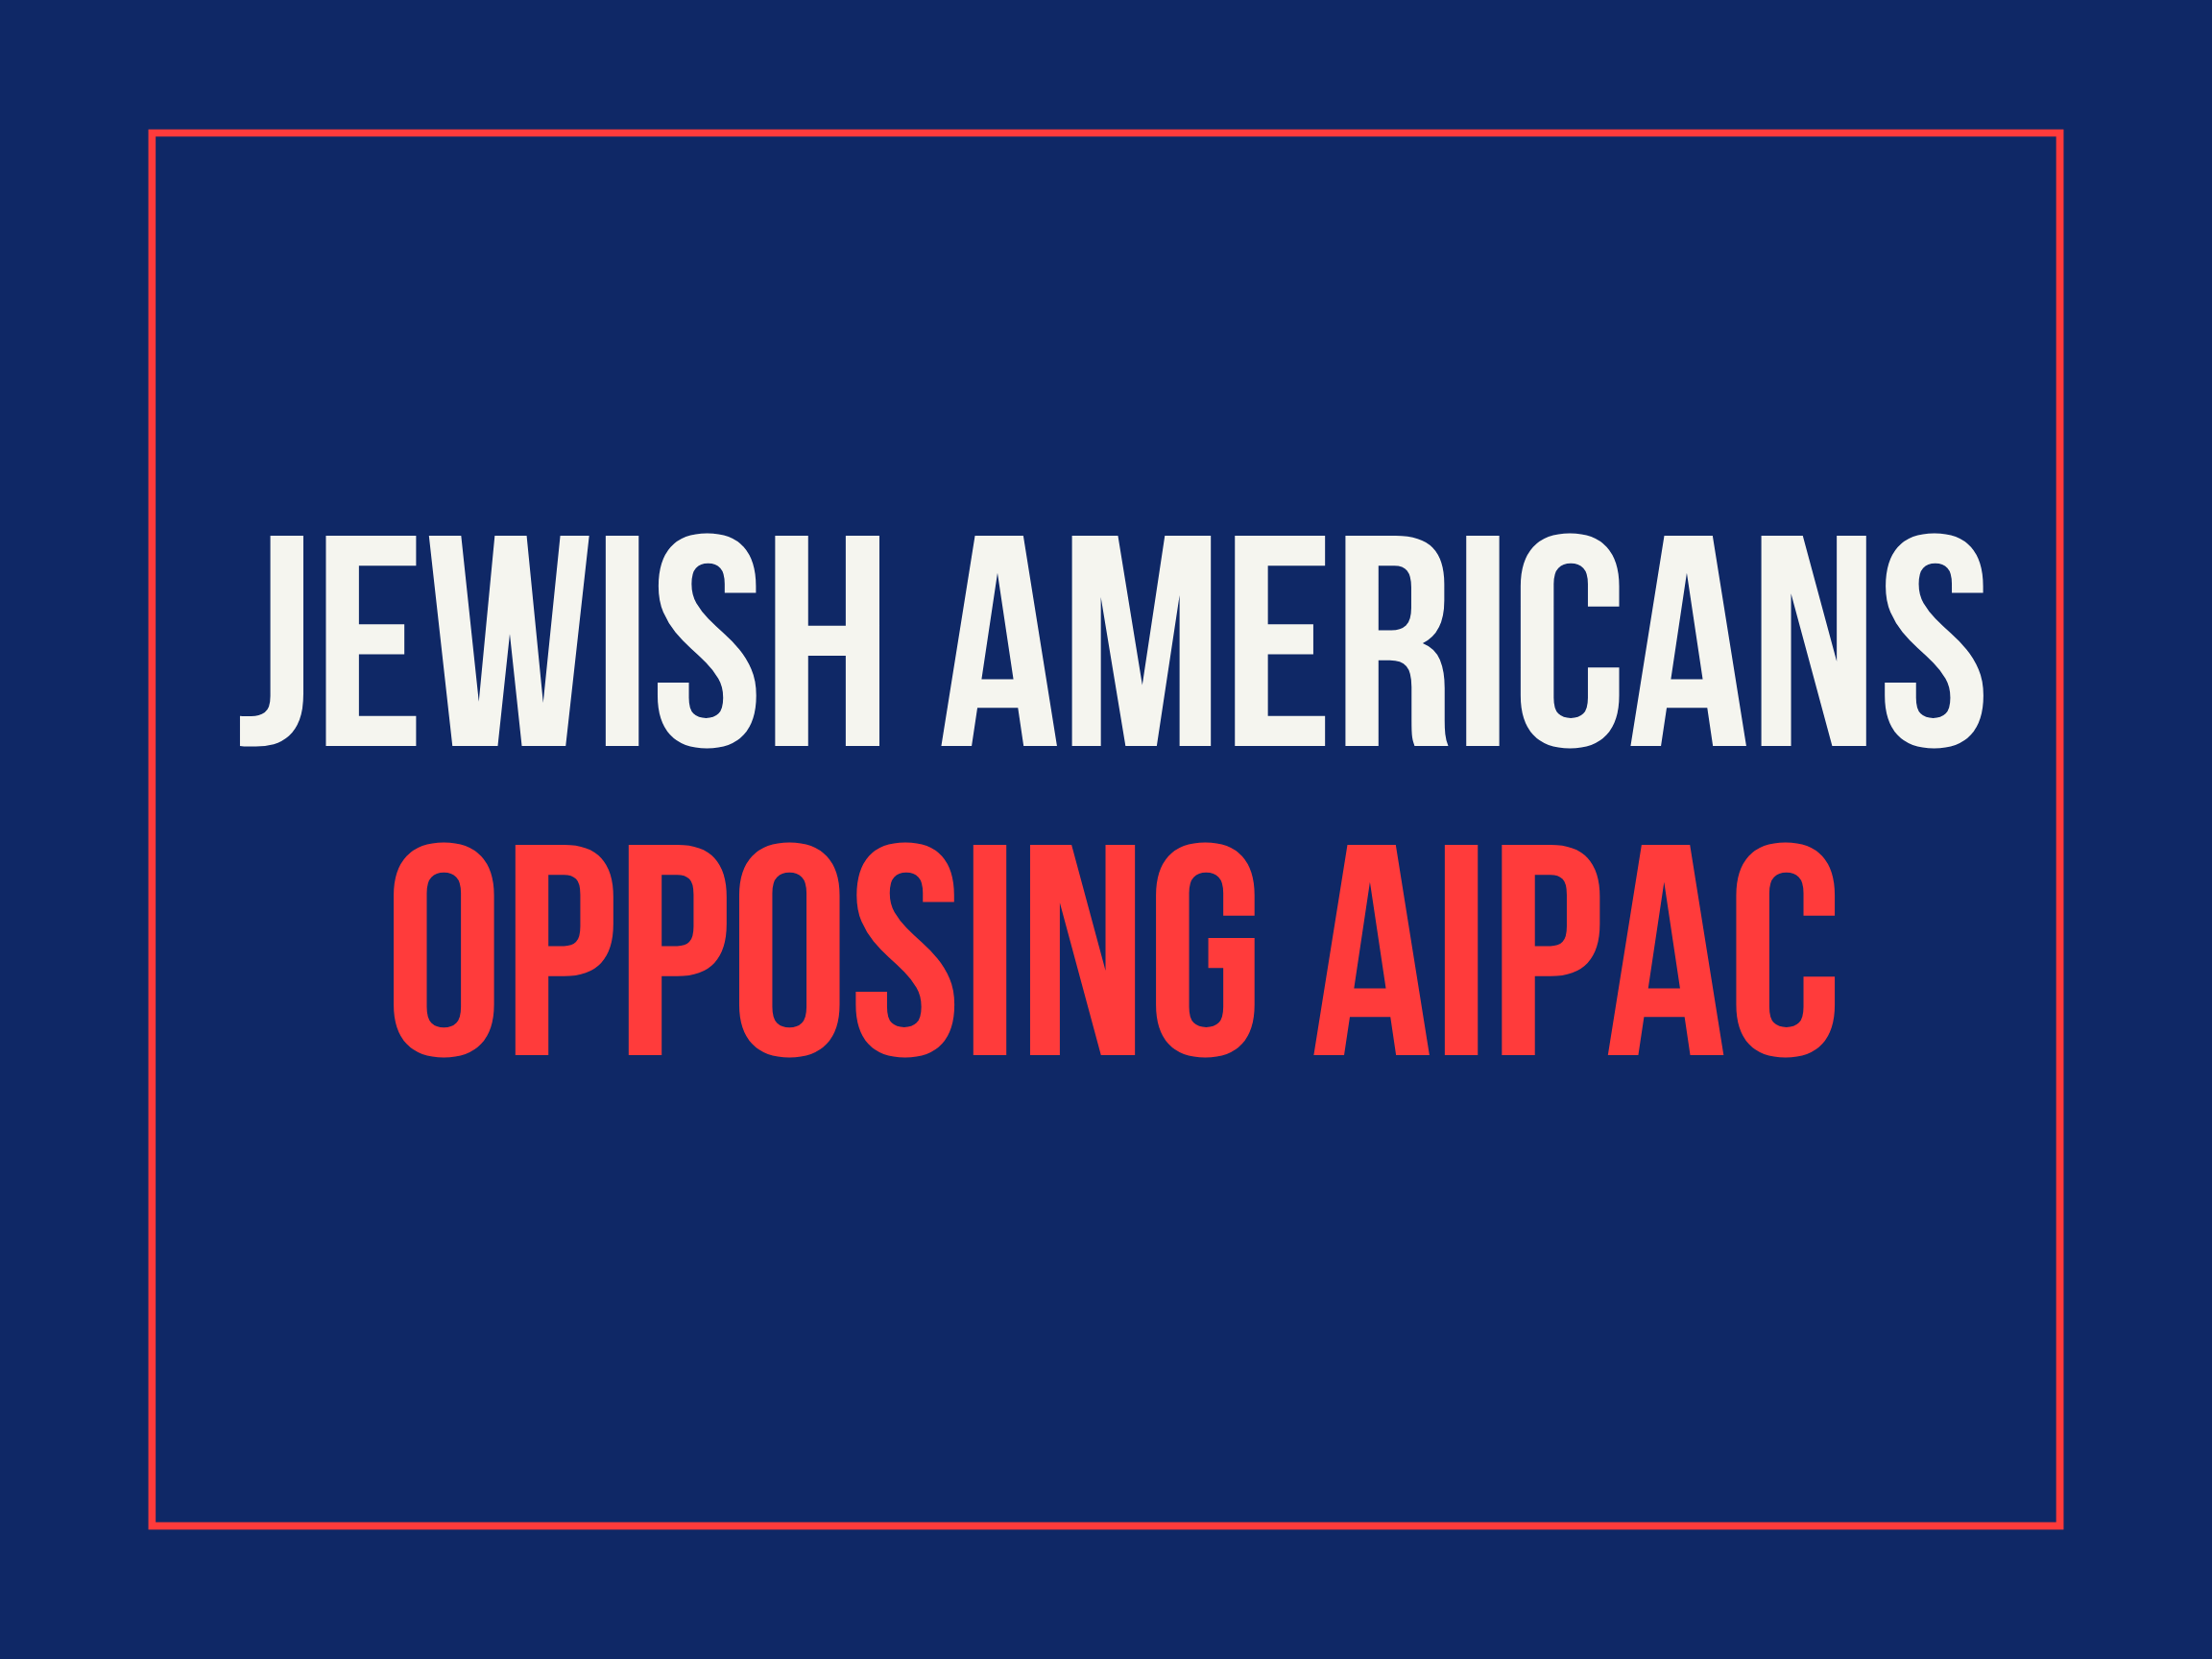 Jewish Americans Opposing AIPAC